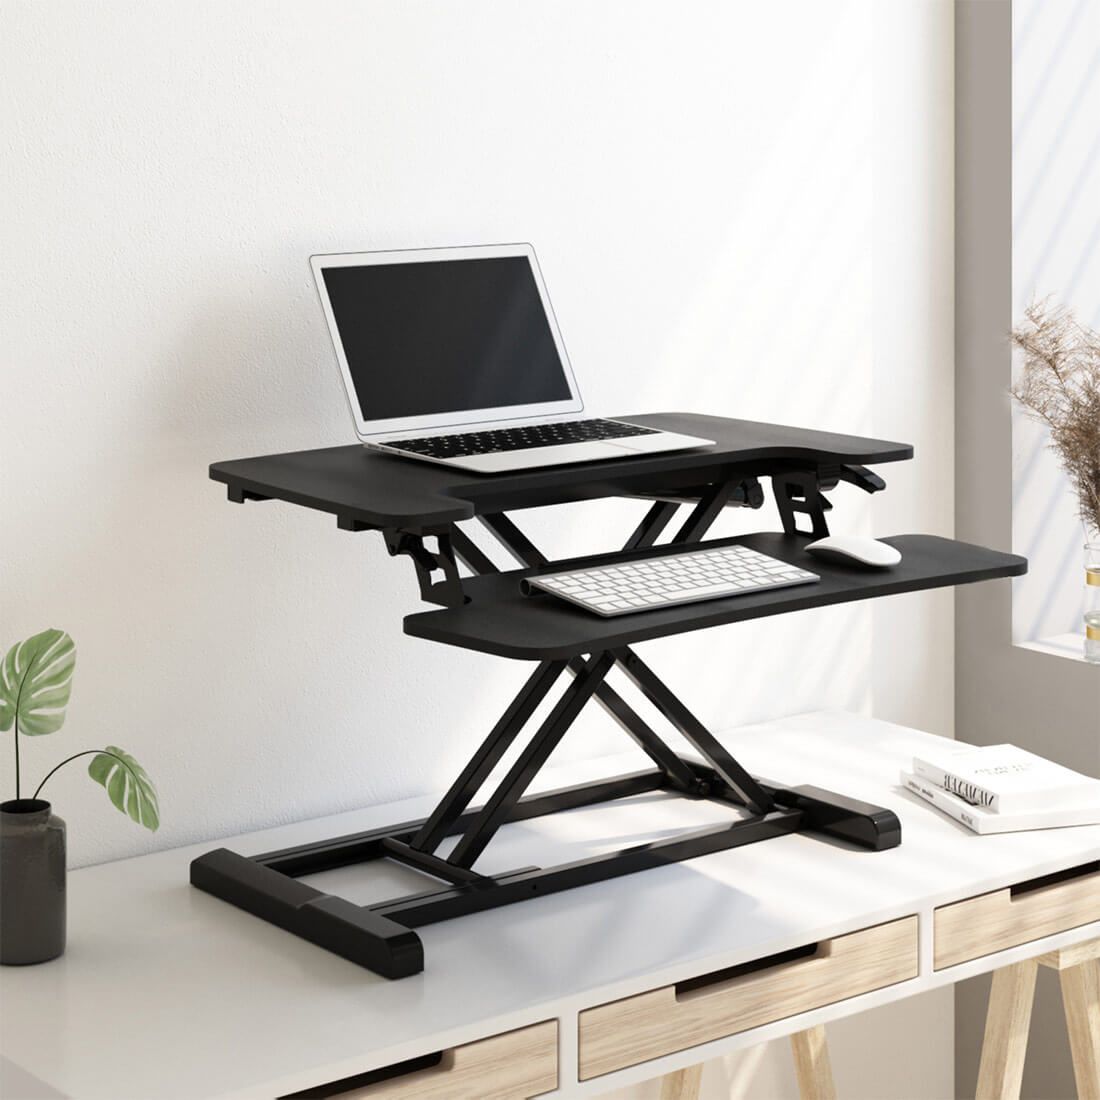 FlexiSpot M7B Standing Converter Desk Promo Image